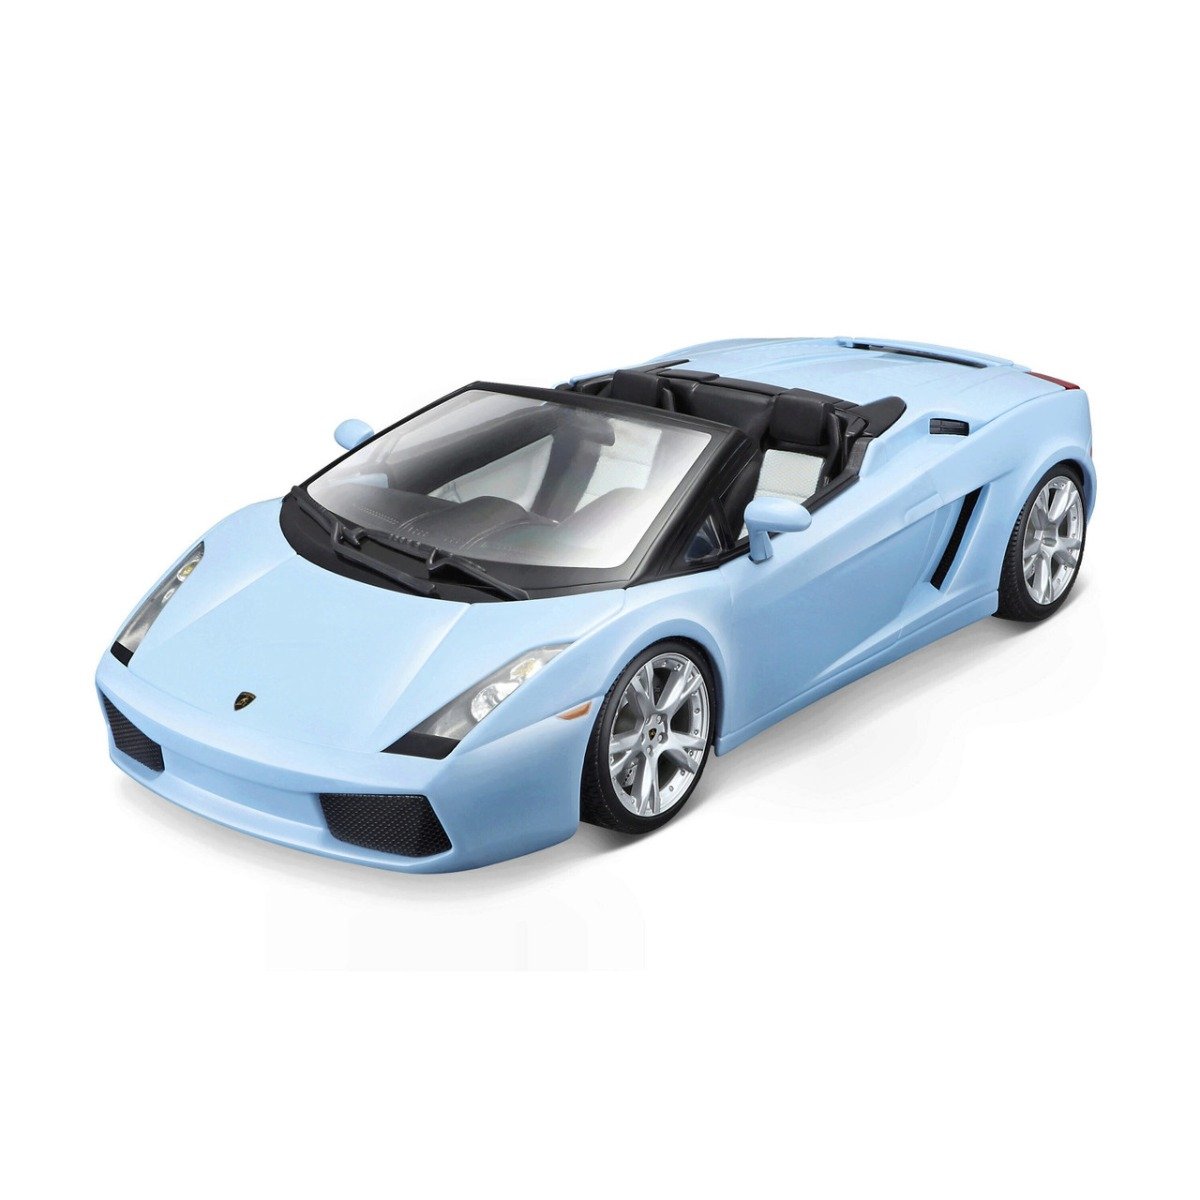 Masinuta Maisto Lamborghini Gallardo Spyder, 1:18, bleu